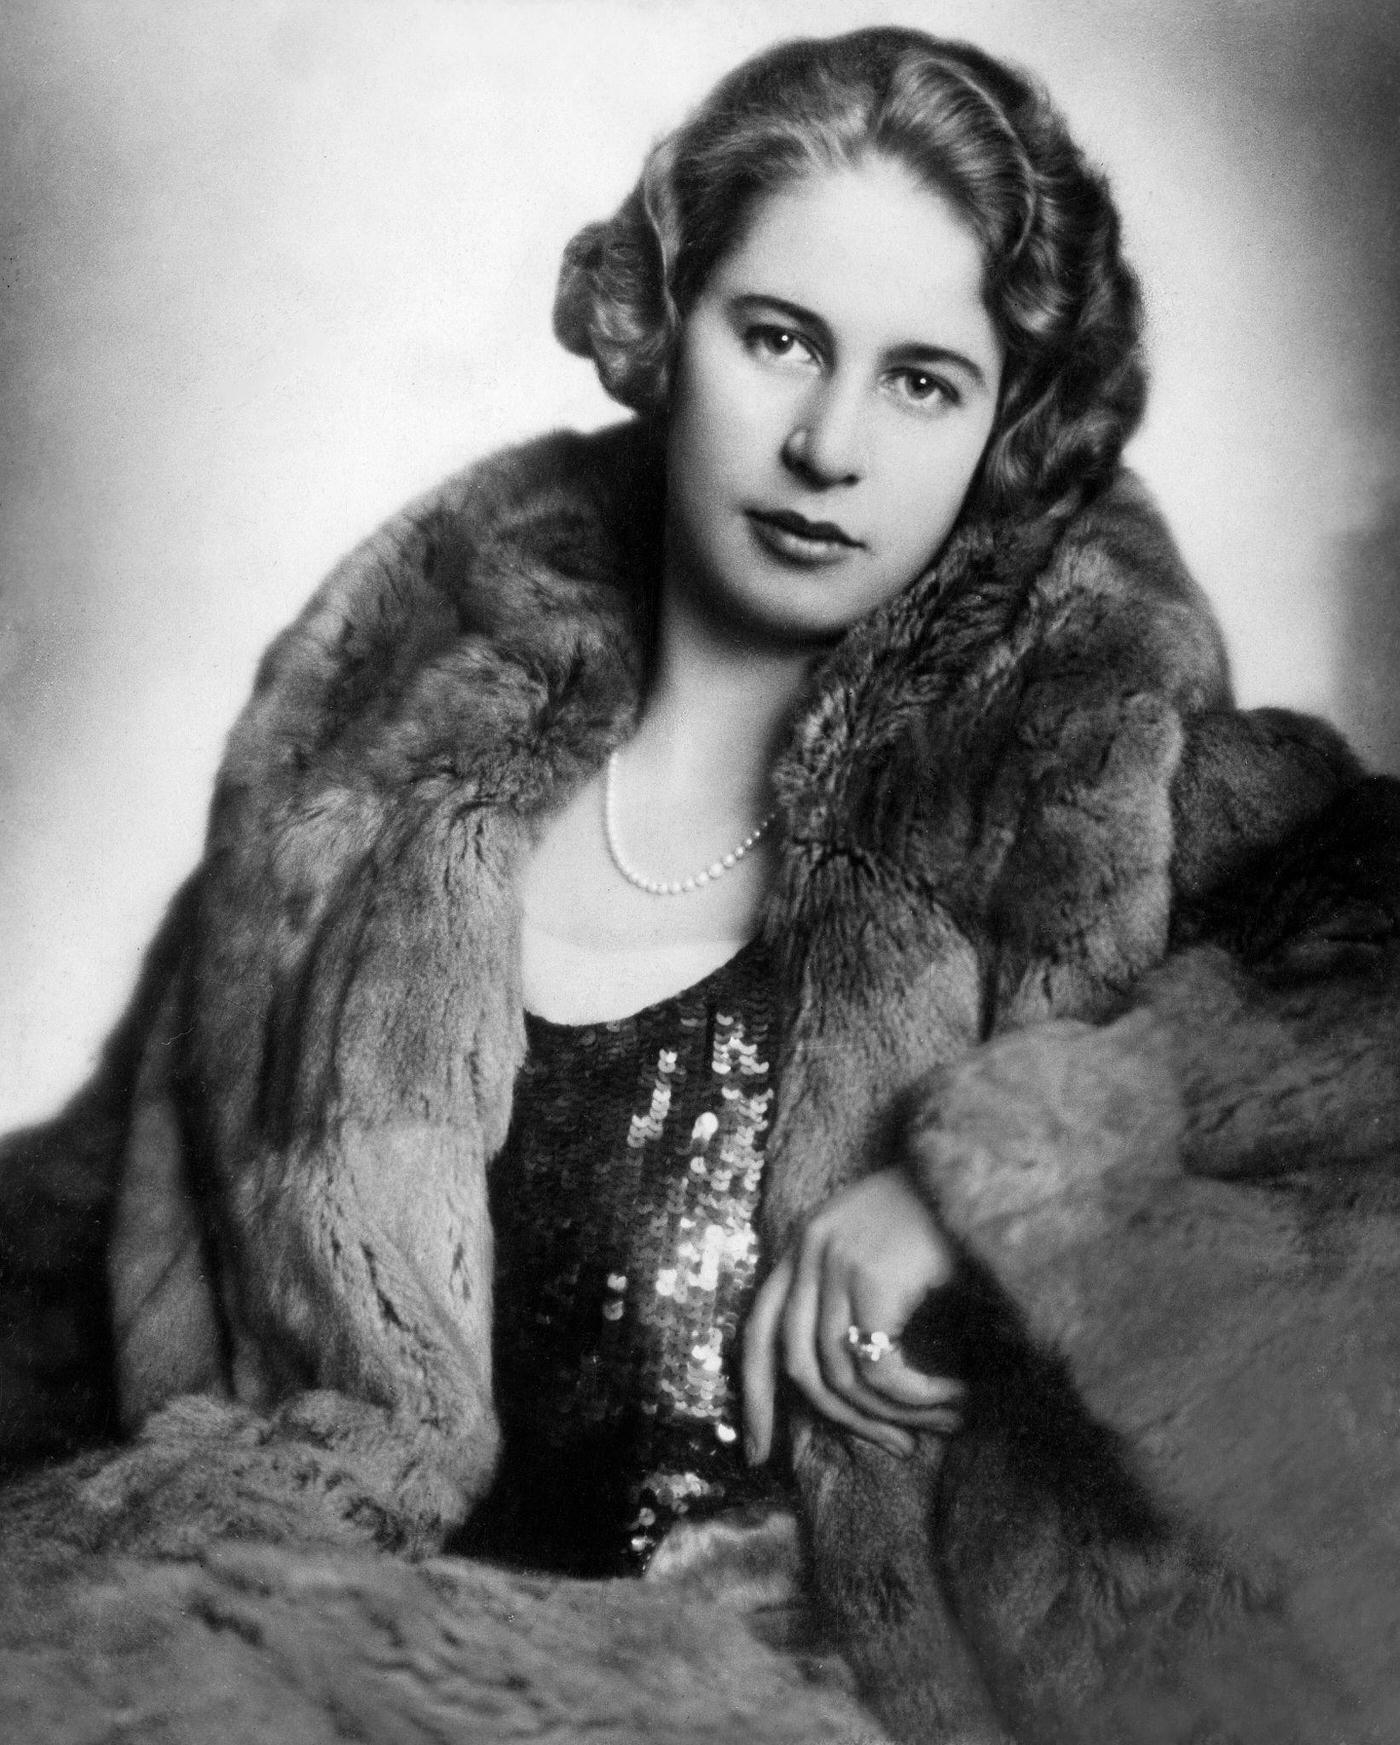 Clärenore Stinnes Posing in a Fur Coat, 1927